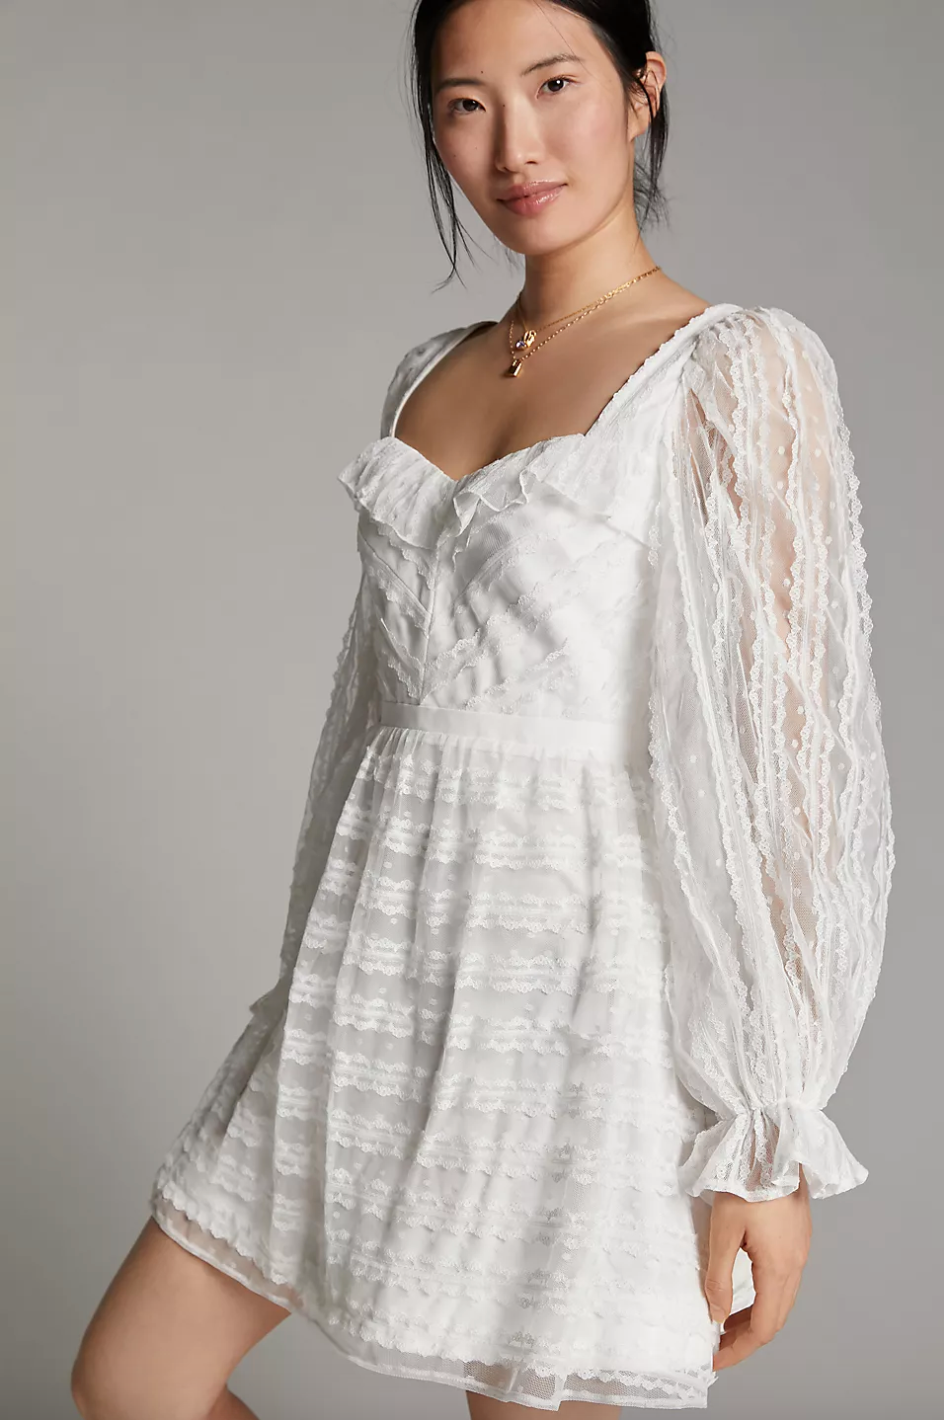 Anthropologie inspired little white dress for your wedding day